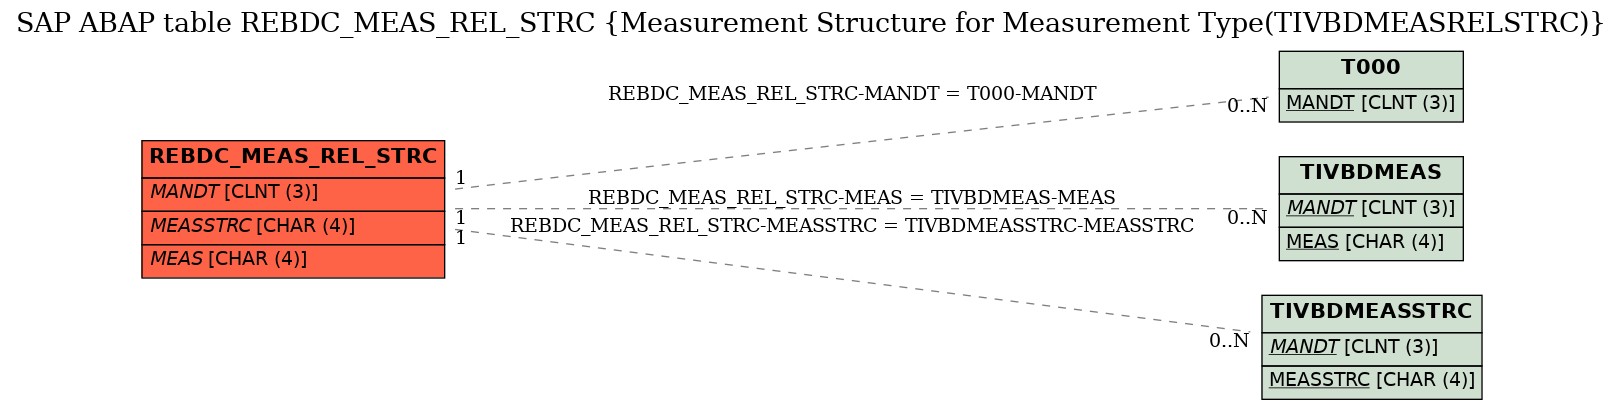 E-R Diagram for table REBDC_MEAS_REL_STRC (Measurement Structure for Measurement Type(TIVBDMEASRELSTRC))